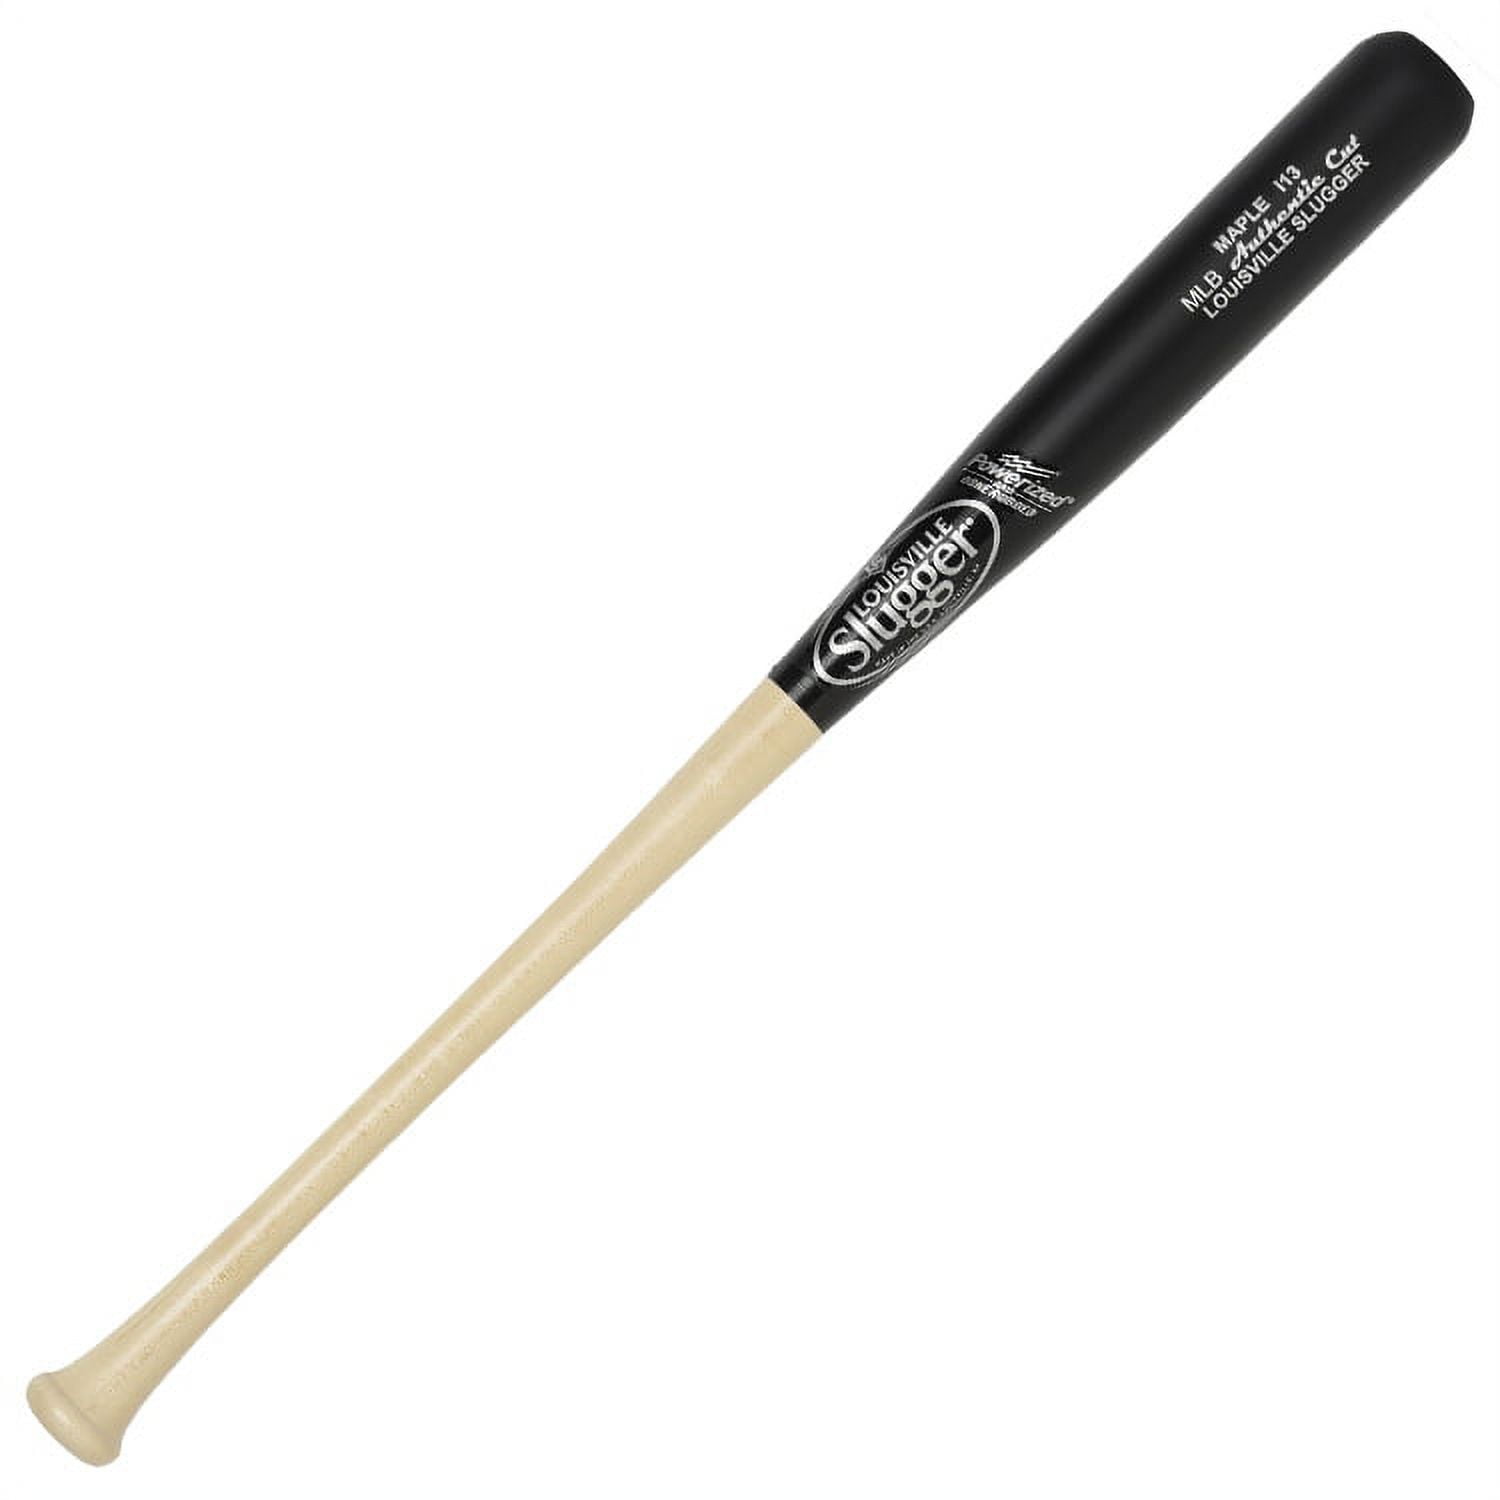 Louisville Slugger I13 Maple Wood Baseball Bat, 34 